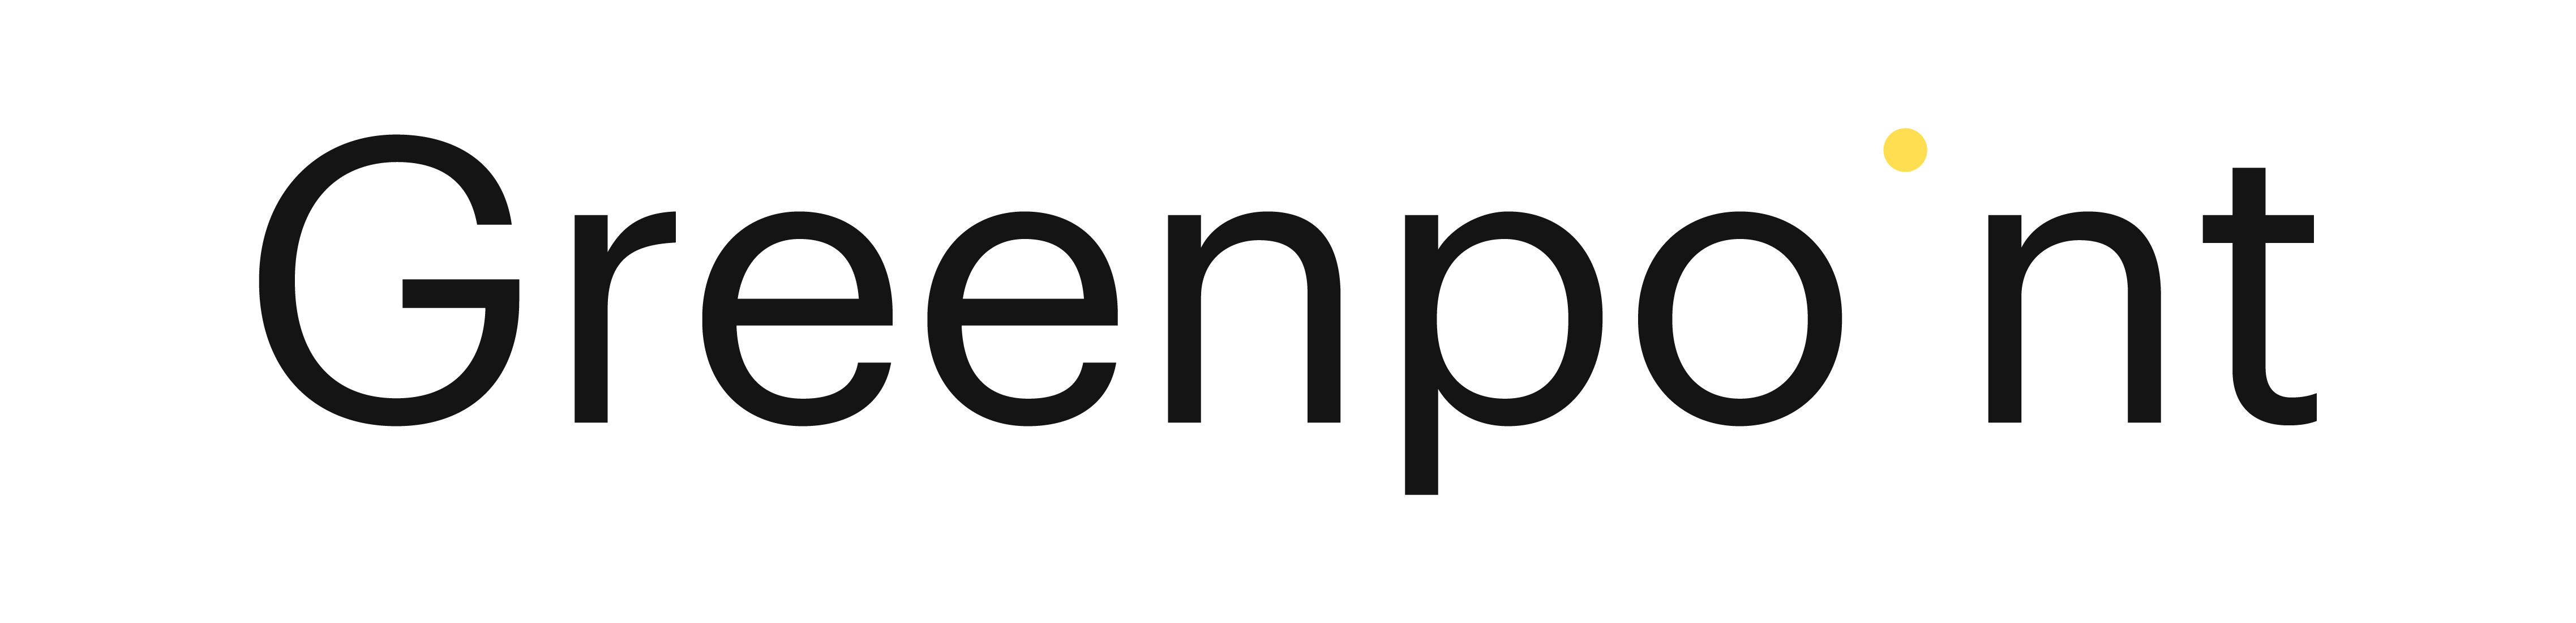 Greenpoint_Logo_Black